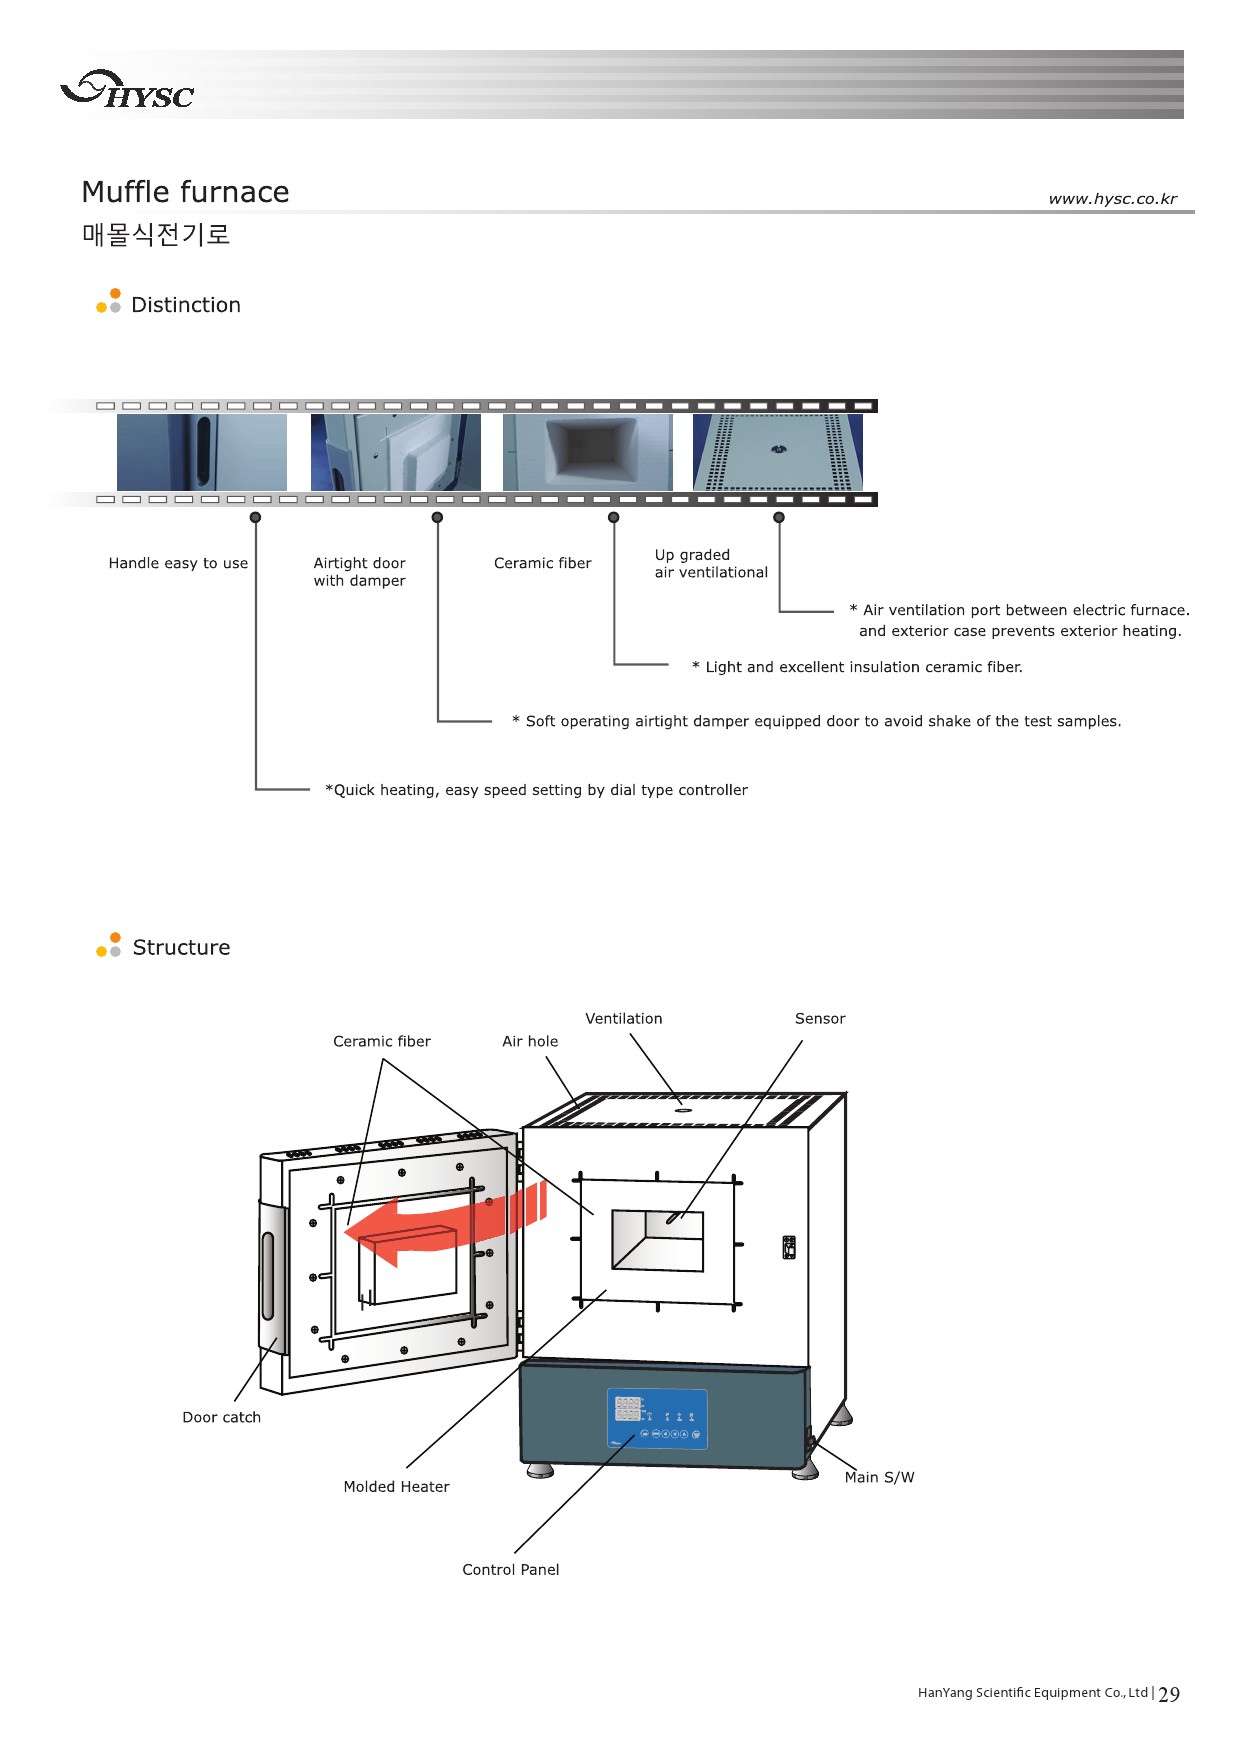 HYSC_Introduction_Muffle furnace-2.jpg